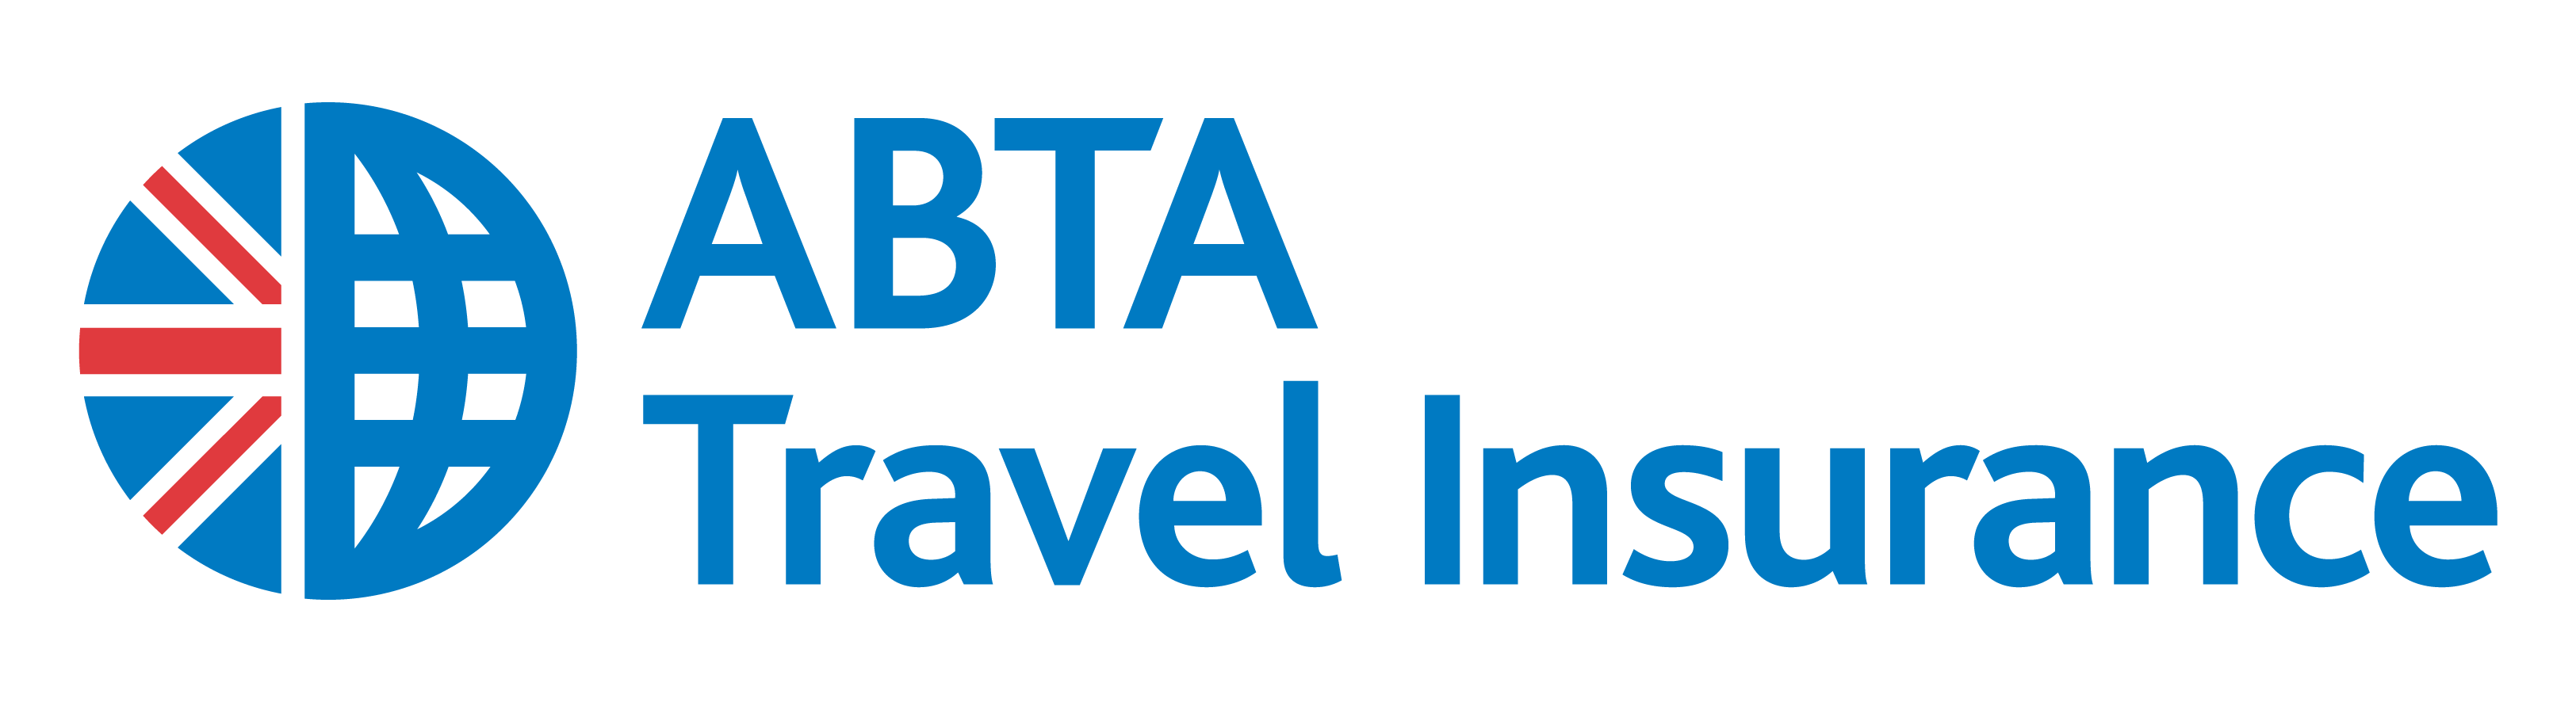 abta travel discount code